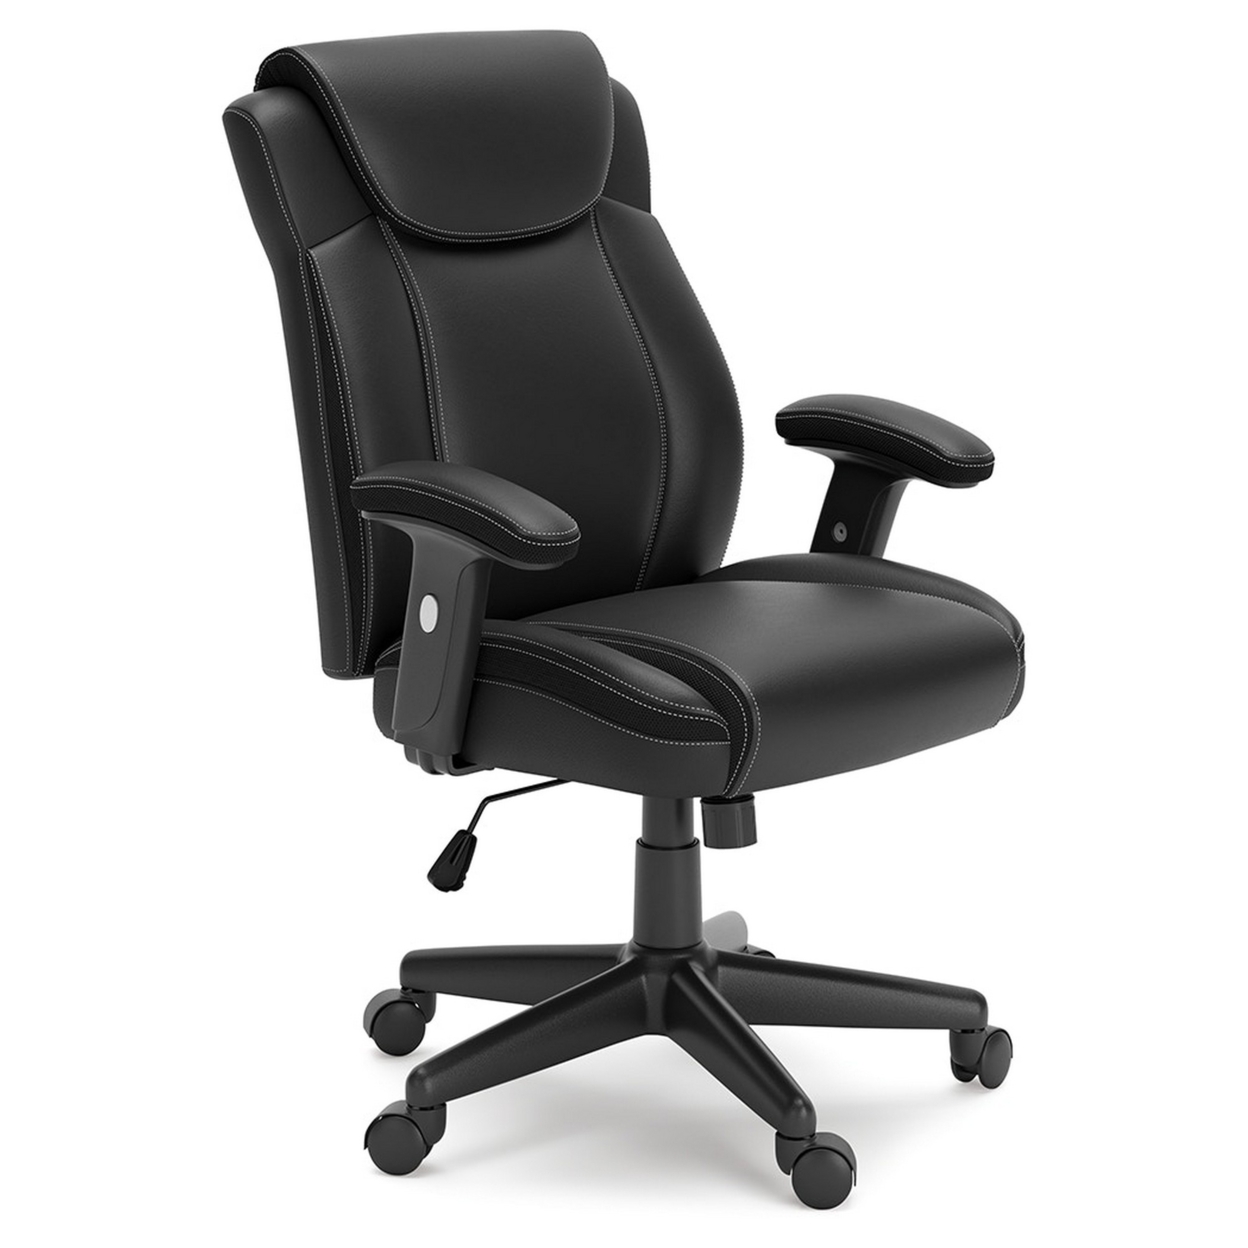 Blake 25 Inch Modern Swivel Office Chair, Faux Leather, Tilt Seat, Black- Saltoro Sherpi